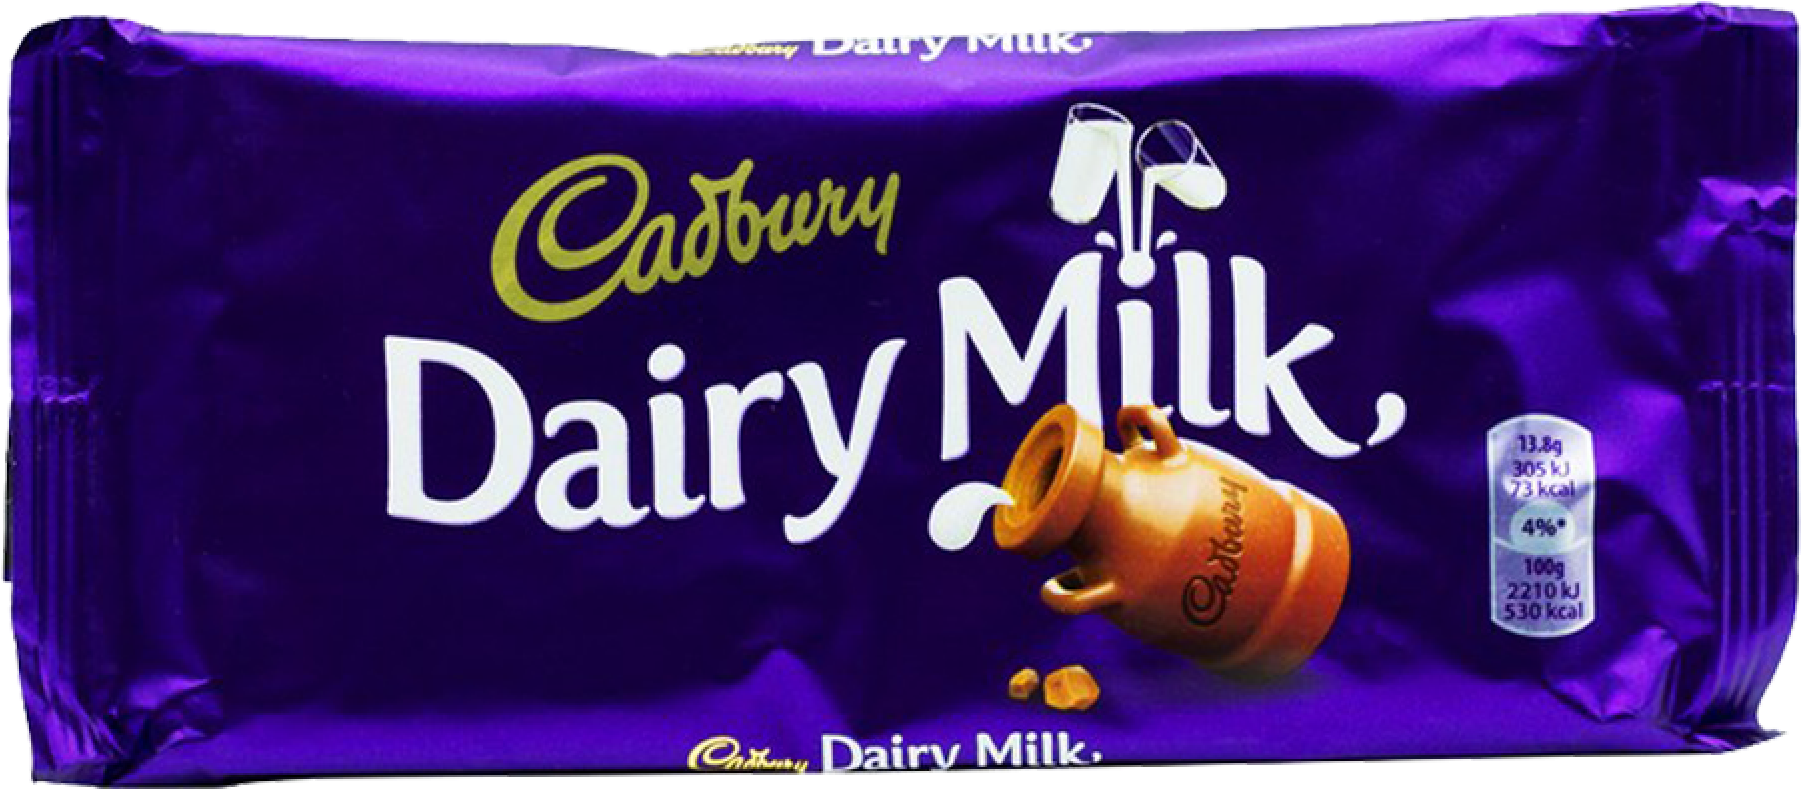 Cadbury Dairy Milk Chocolate Bar PNG image